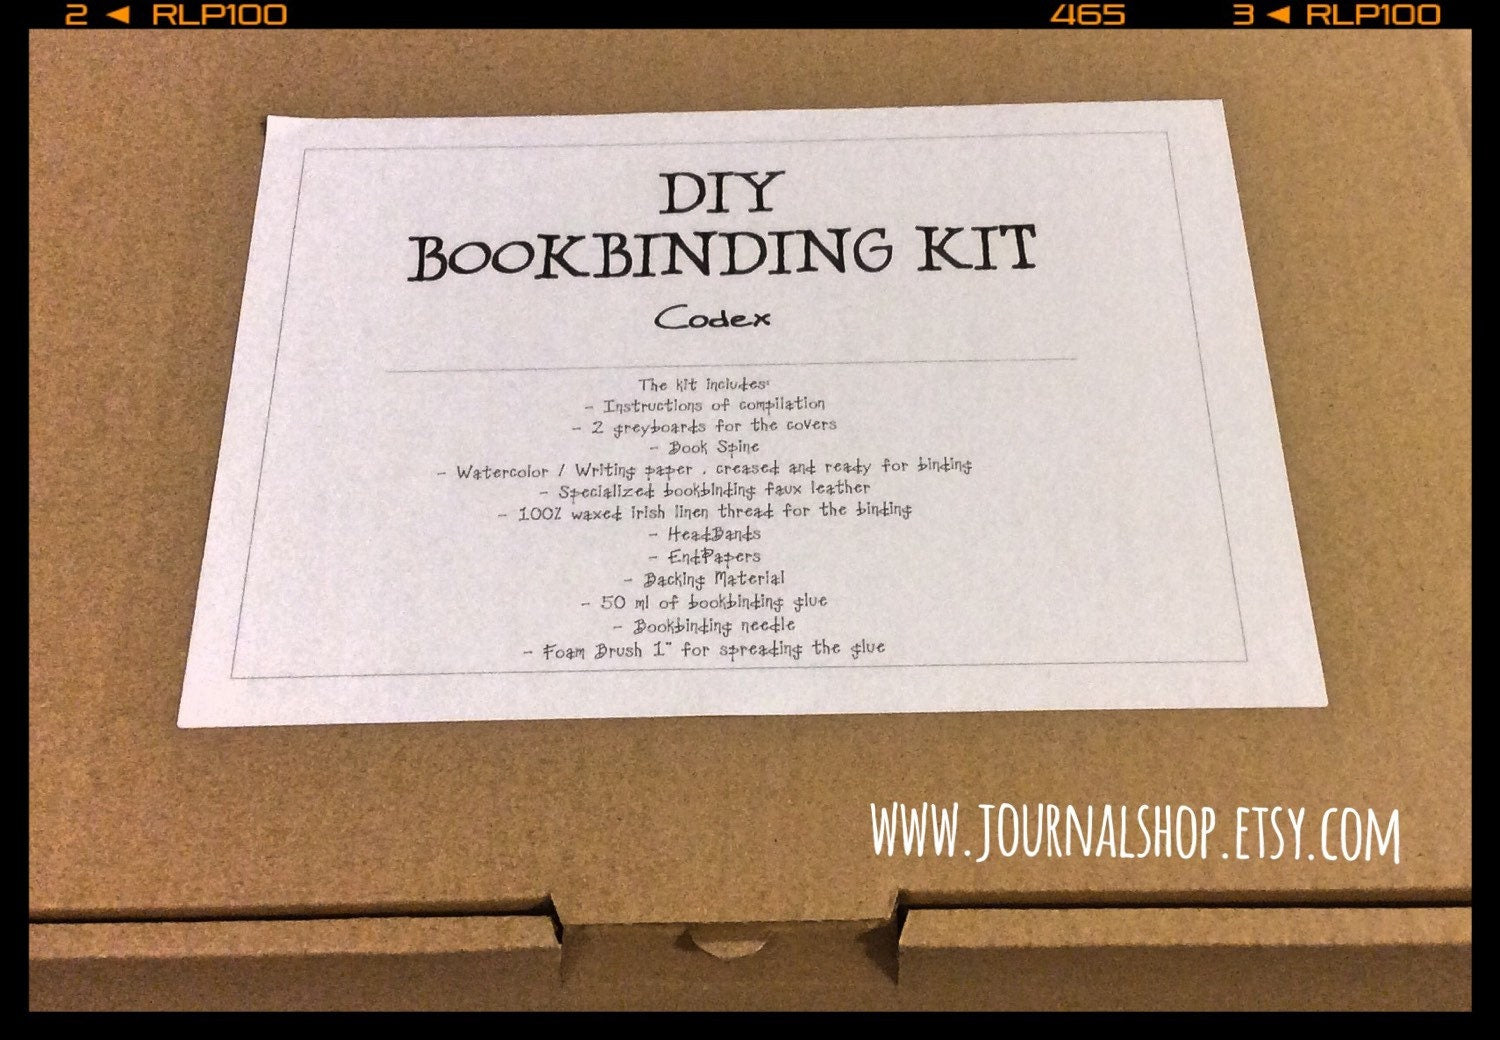 Bookbinding Travel Tool Kit for DIY books, Gift set for Bookbinders –